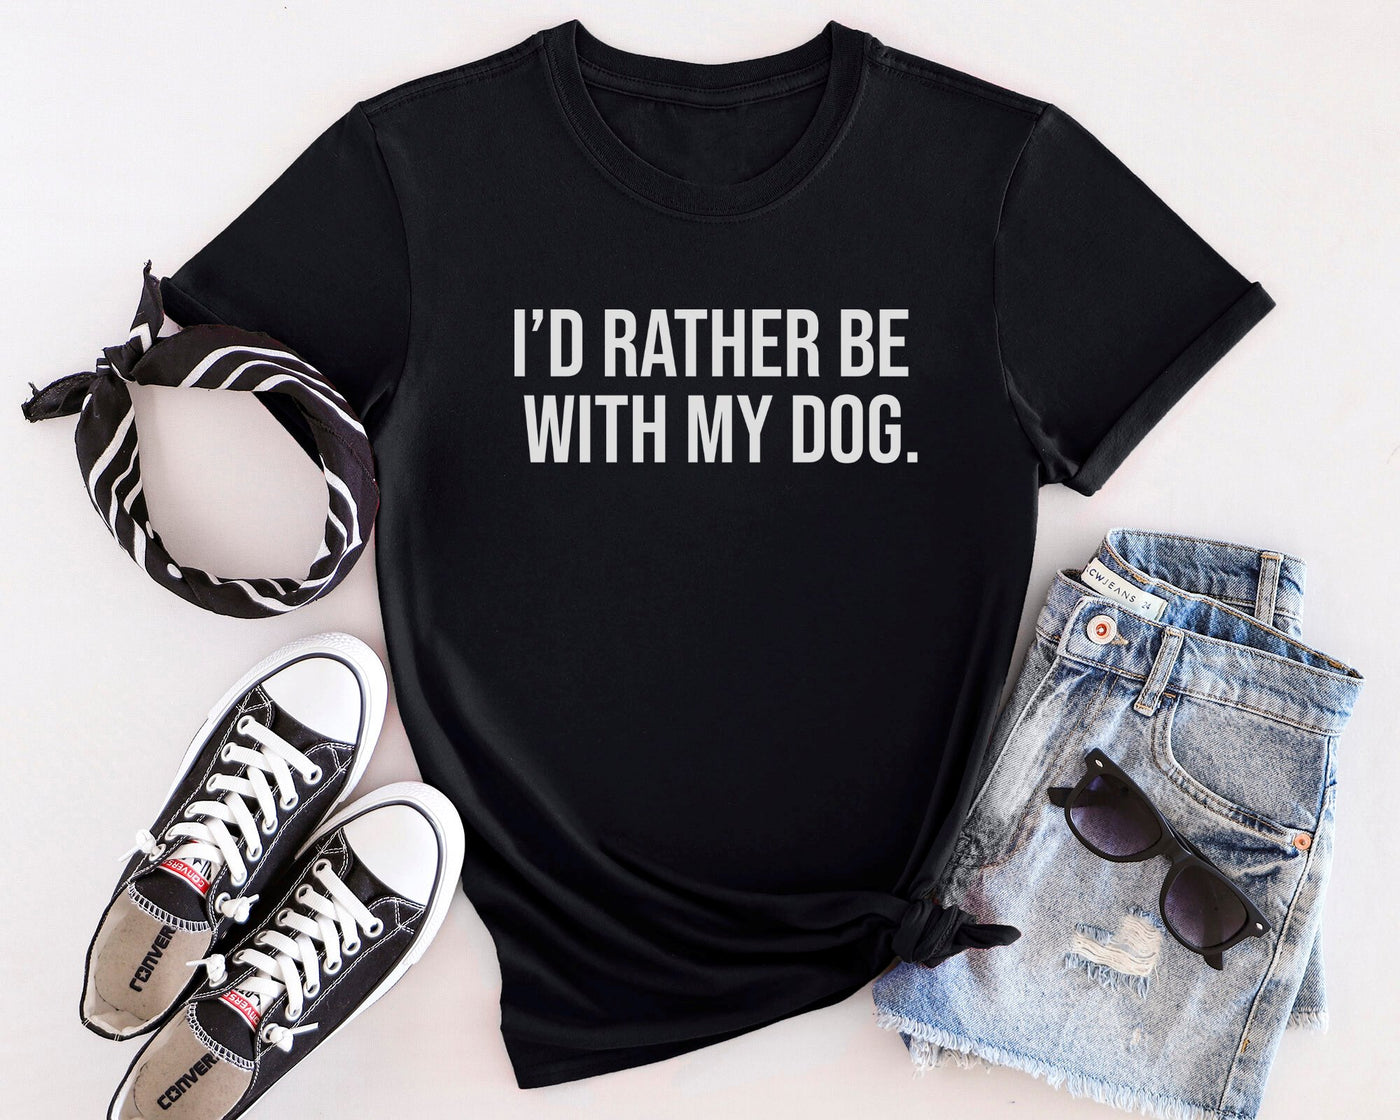 I'd Rather My Dog Tapered T-Shirt Black Shirts Selfawear 